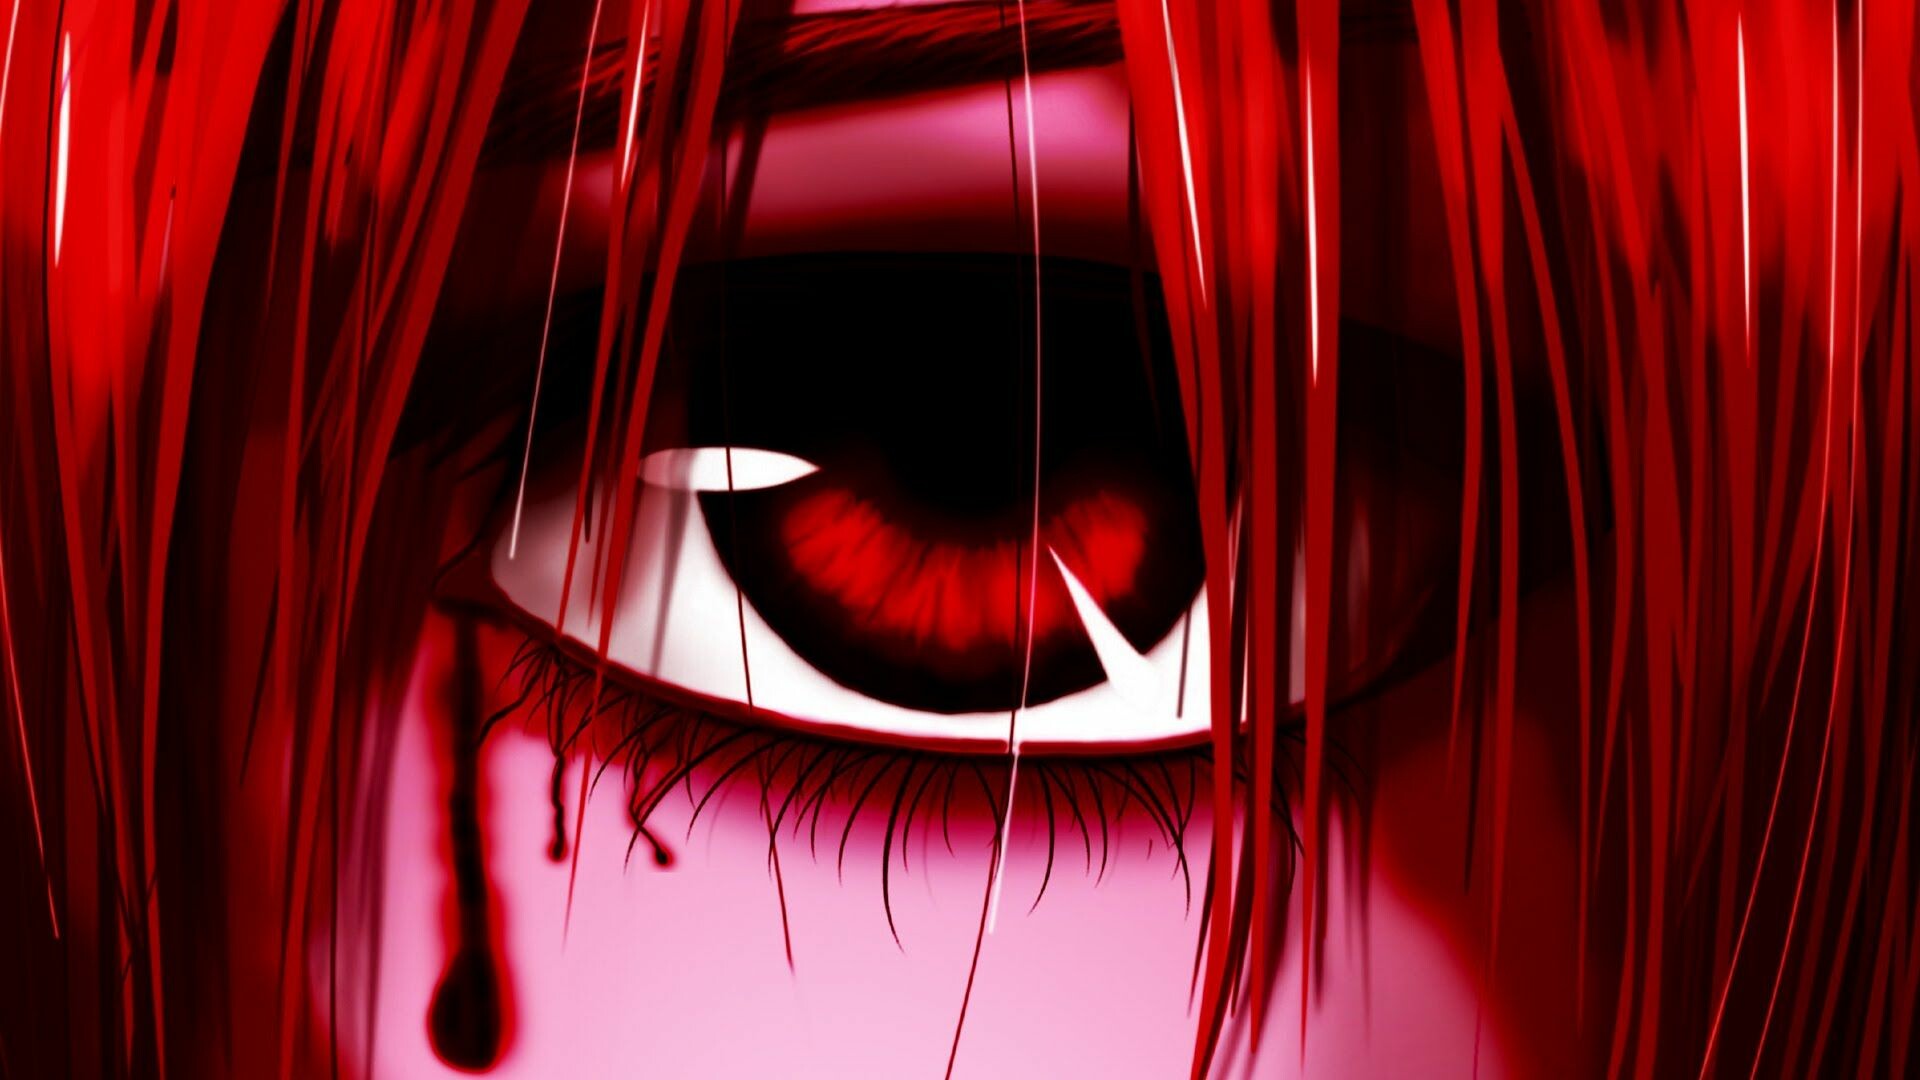 Download Creepy Anime Gothic Girl Monochrome Portrait Wallpaper | Wallpapers .com